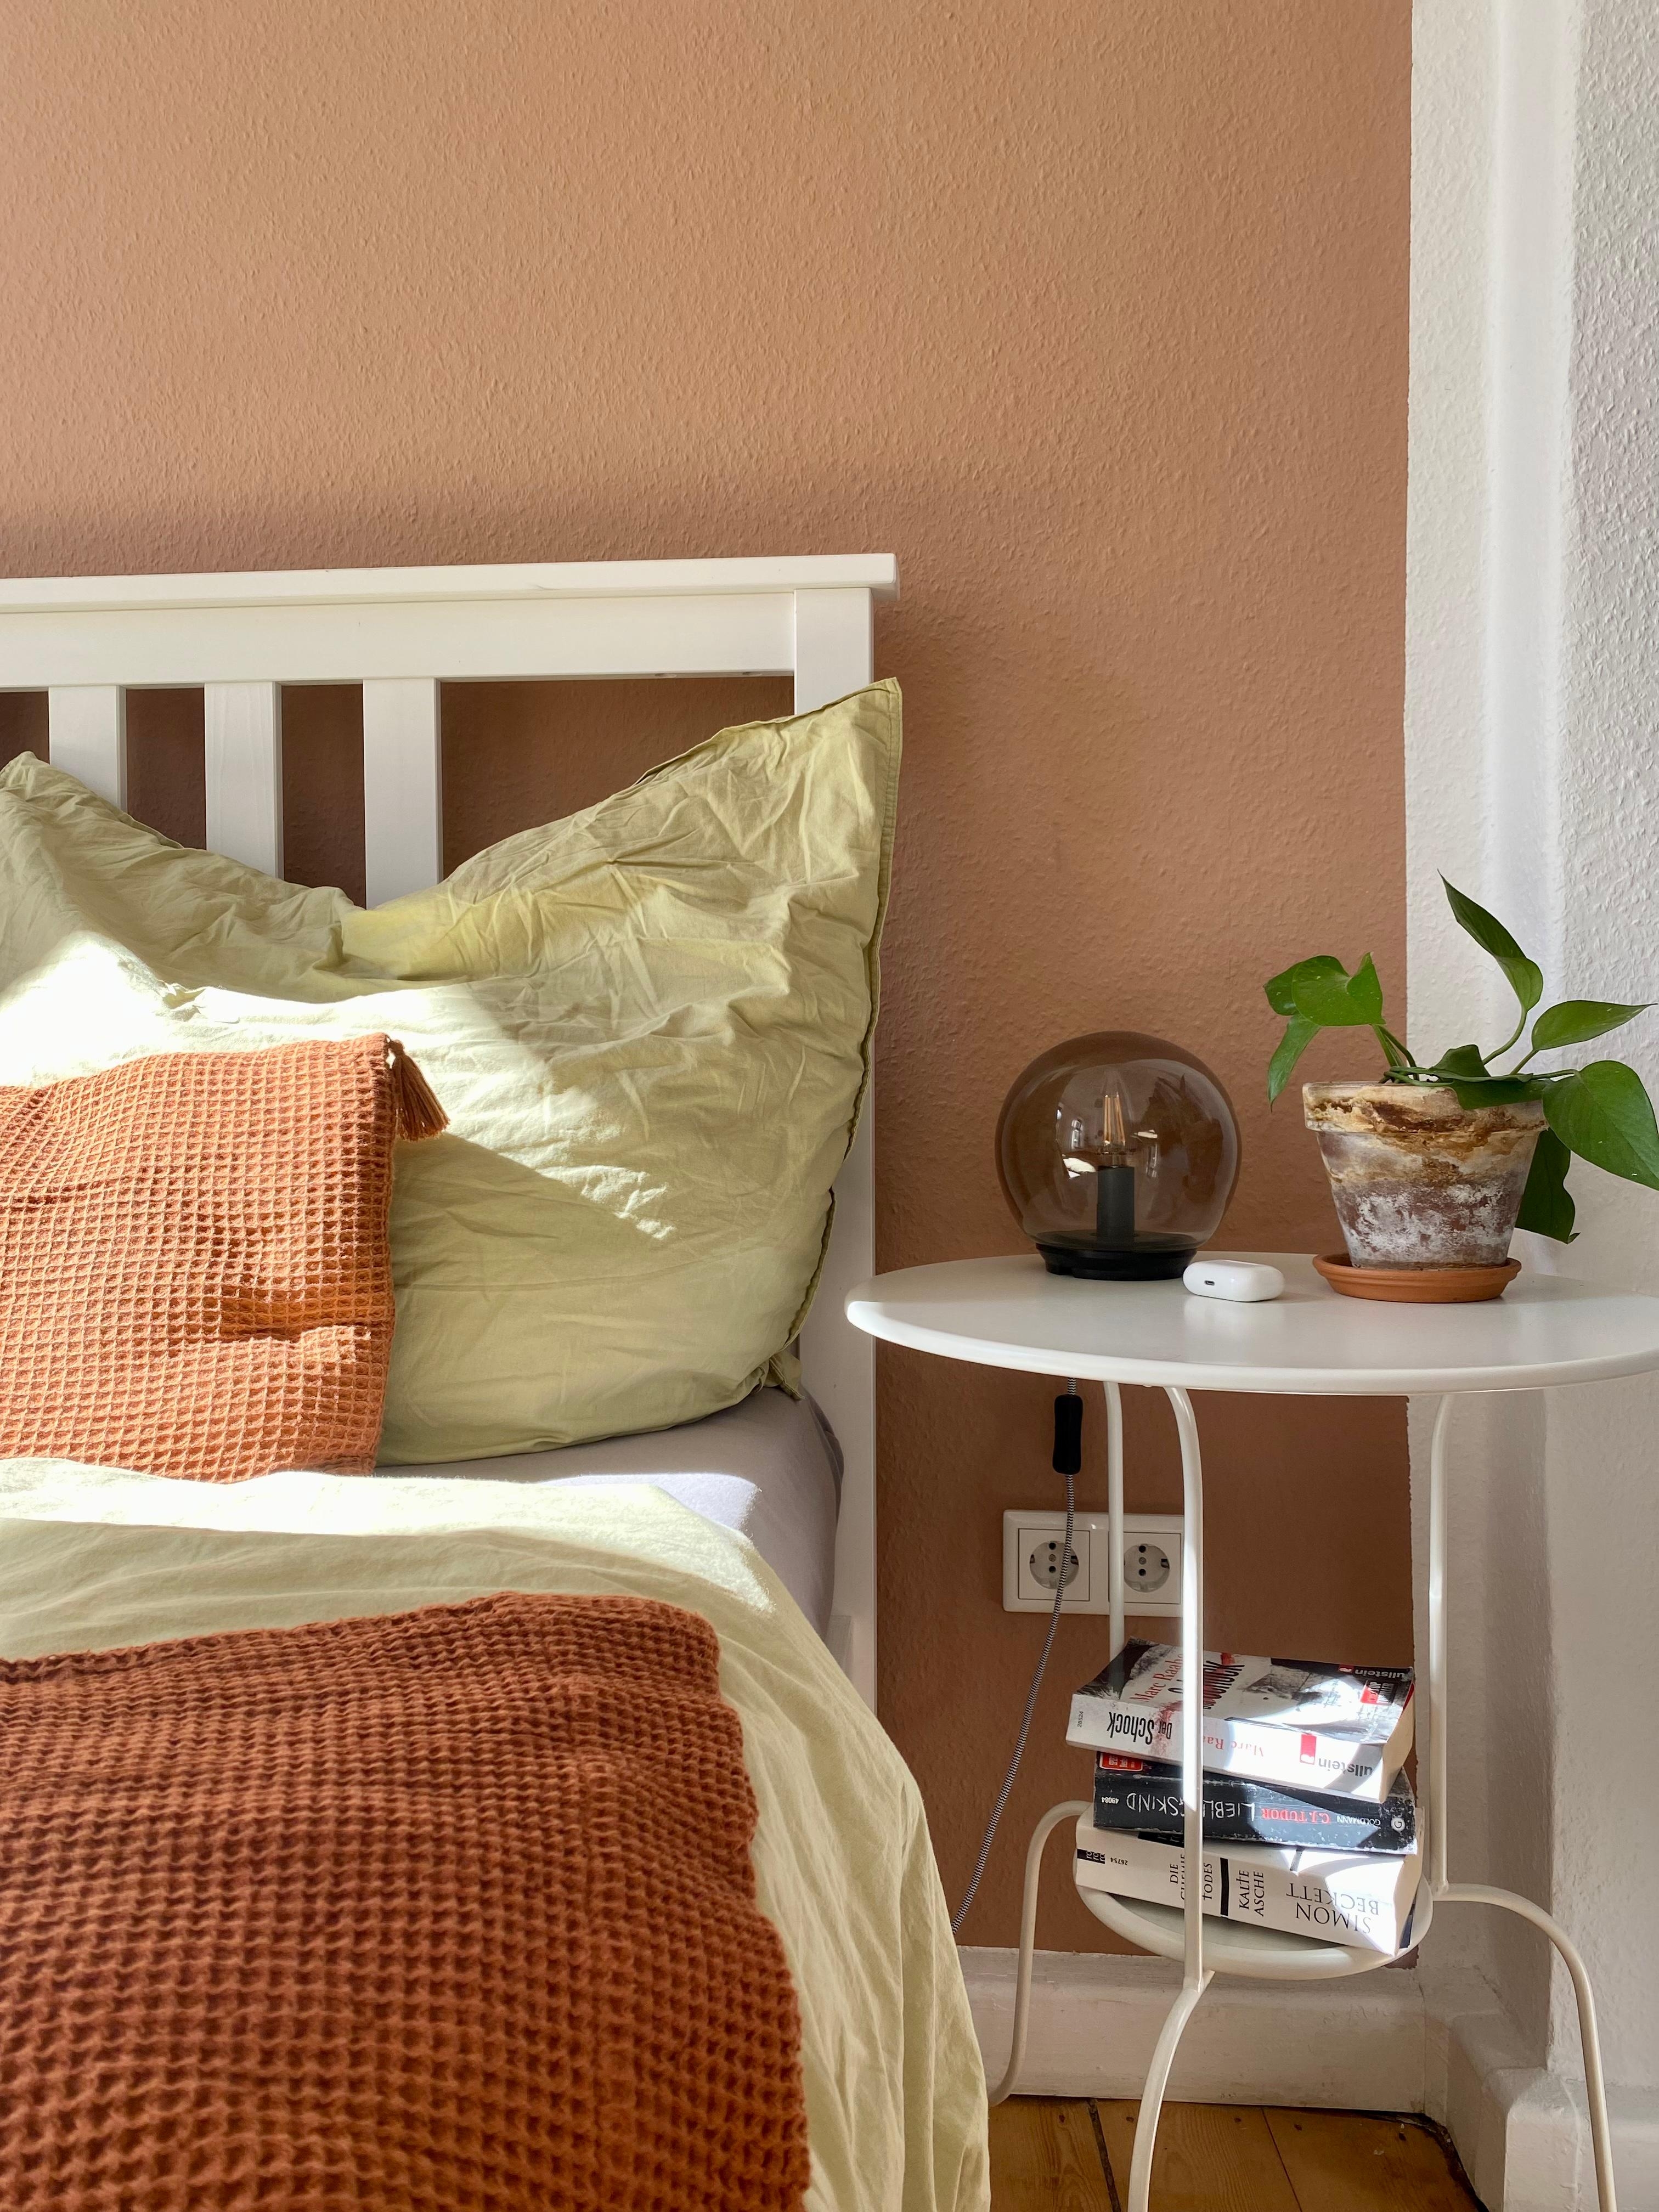 Bedroom vibes ✨
#boho #wandfarbe #altbau #ikeainspo  